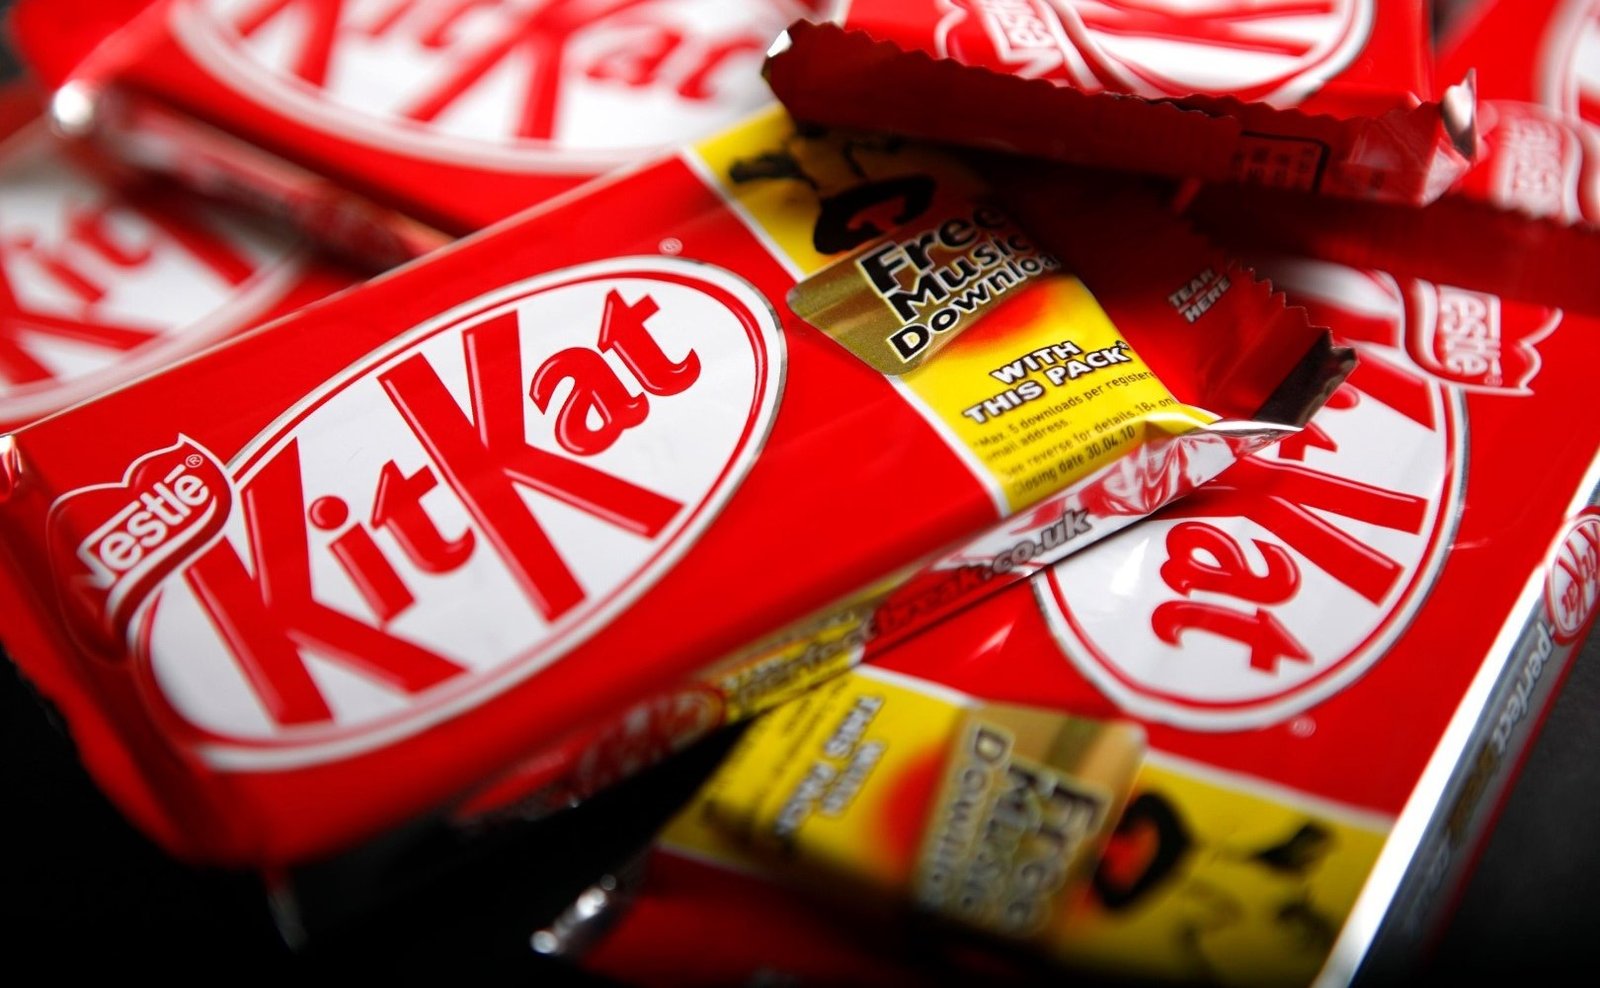 Kitkat Marketing Mix